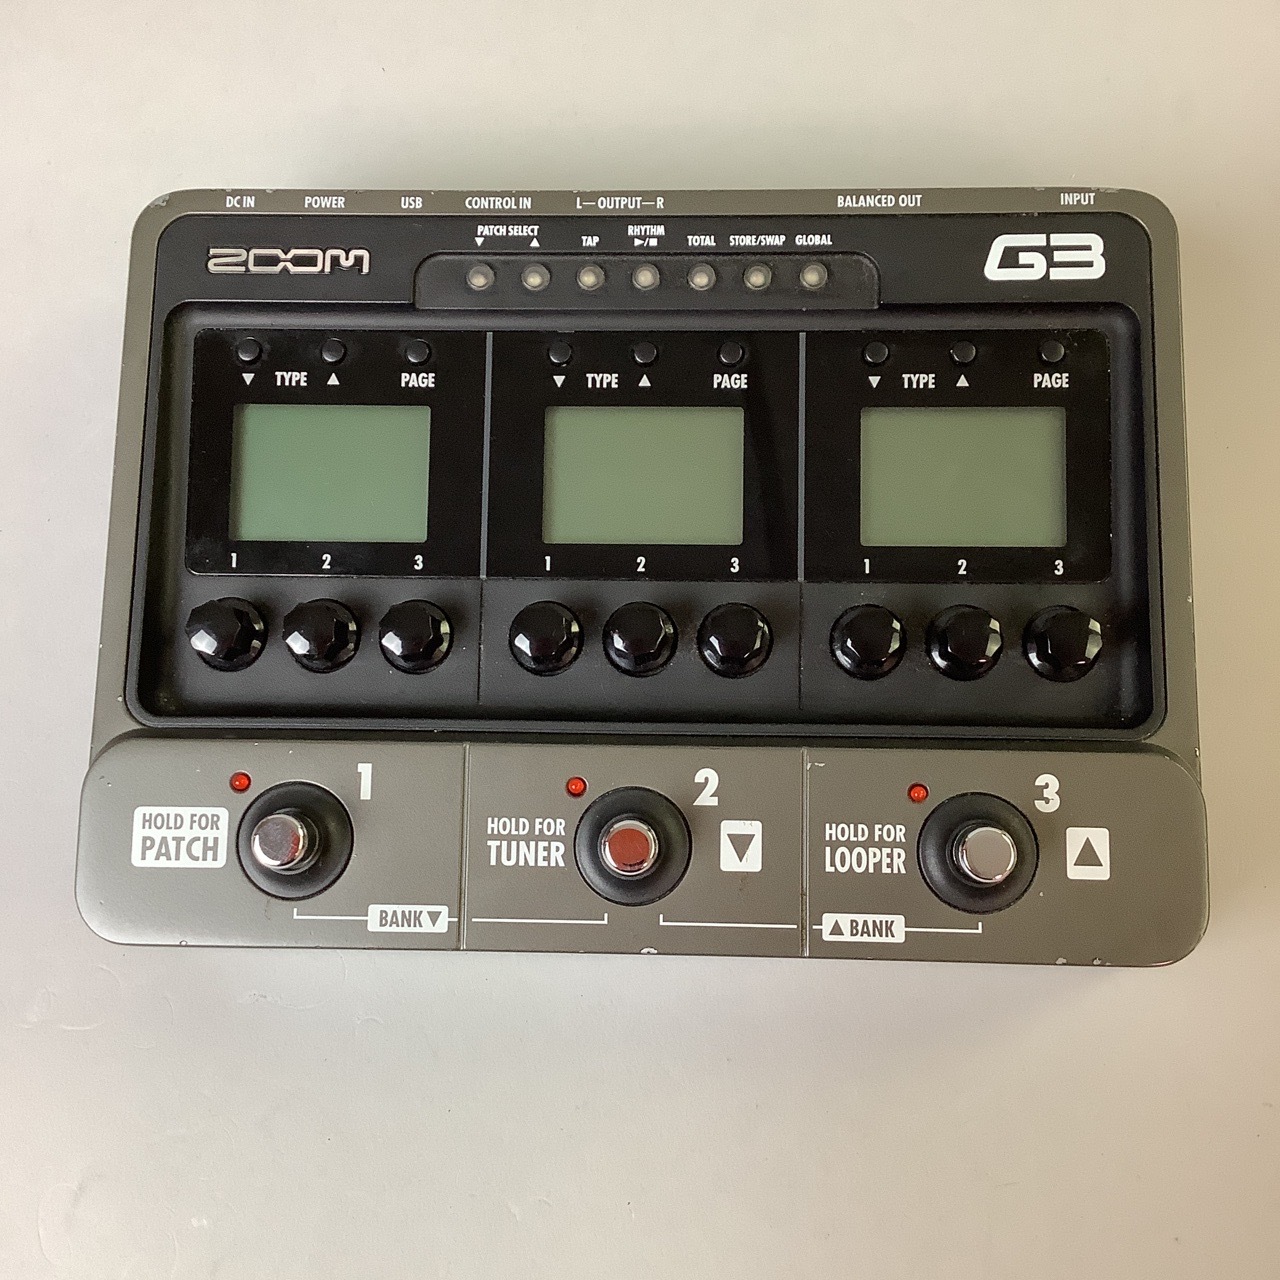 ZOOM ギター用エフェクト・アンプシミュレーター G3 Version 2.0 